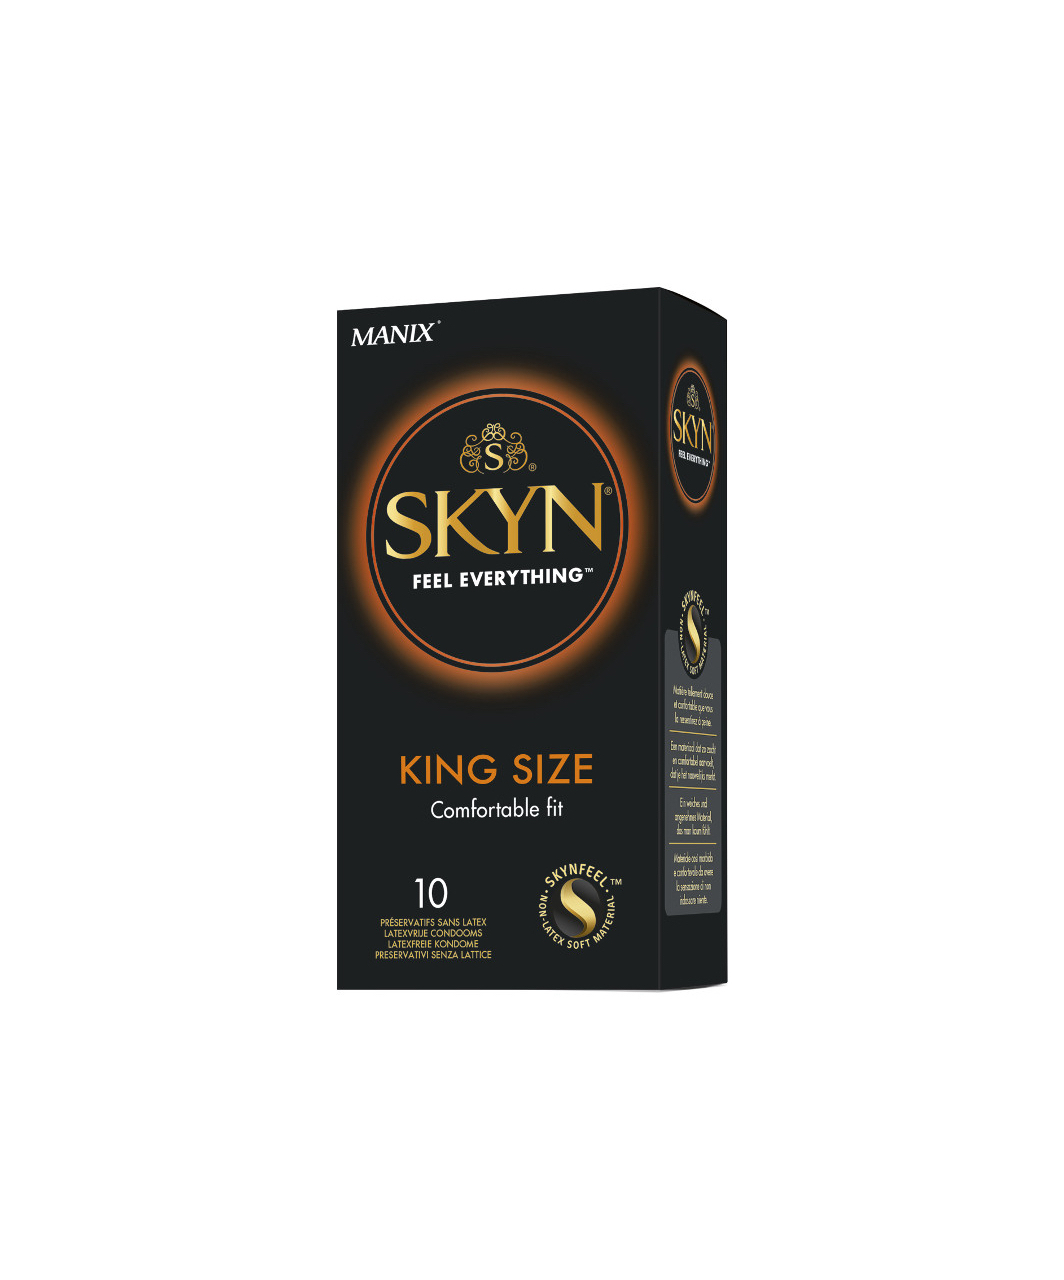 SKYN King Size презервативы (3 / 10 шт.)